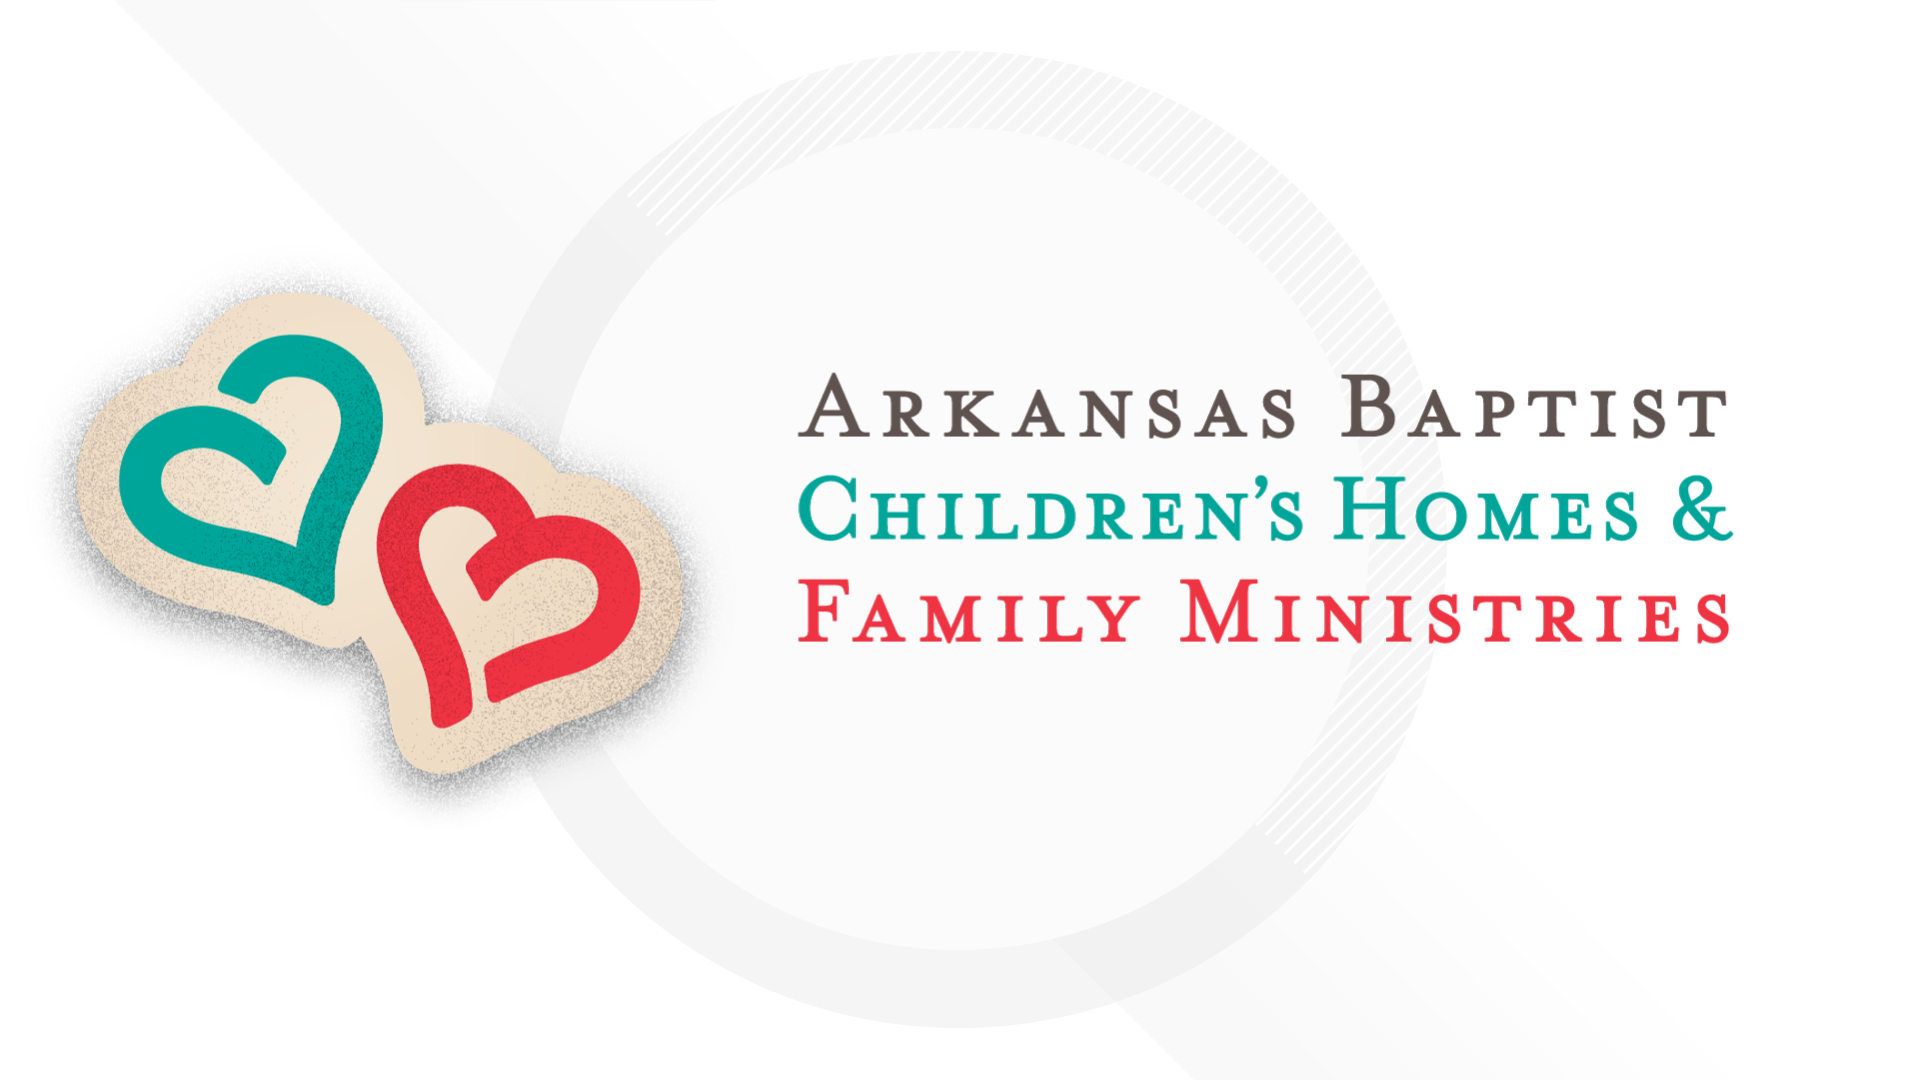 Arkansas Baptist Children’s Homes & Family Ministries seeks to build, strengthen and restore Arkansas families in crisis.